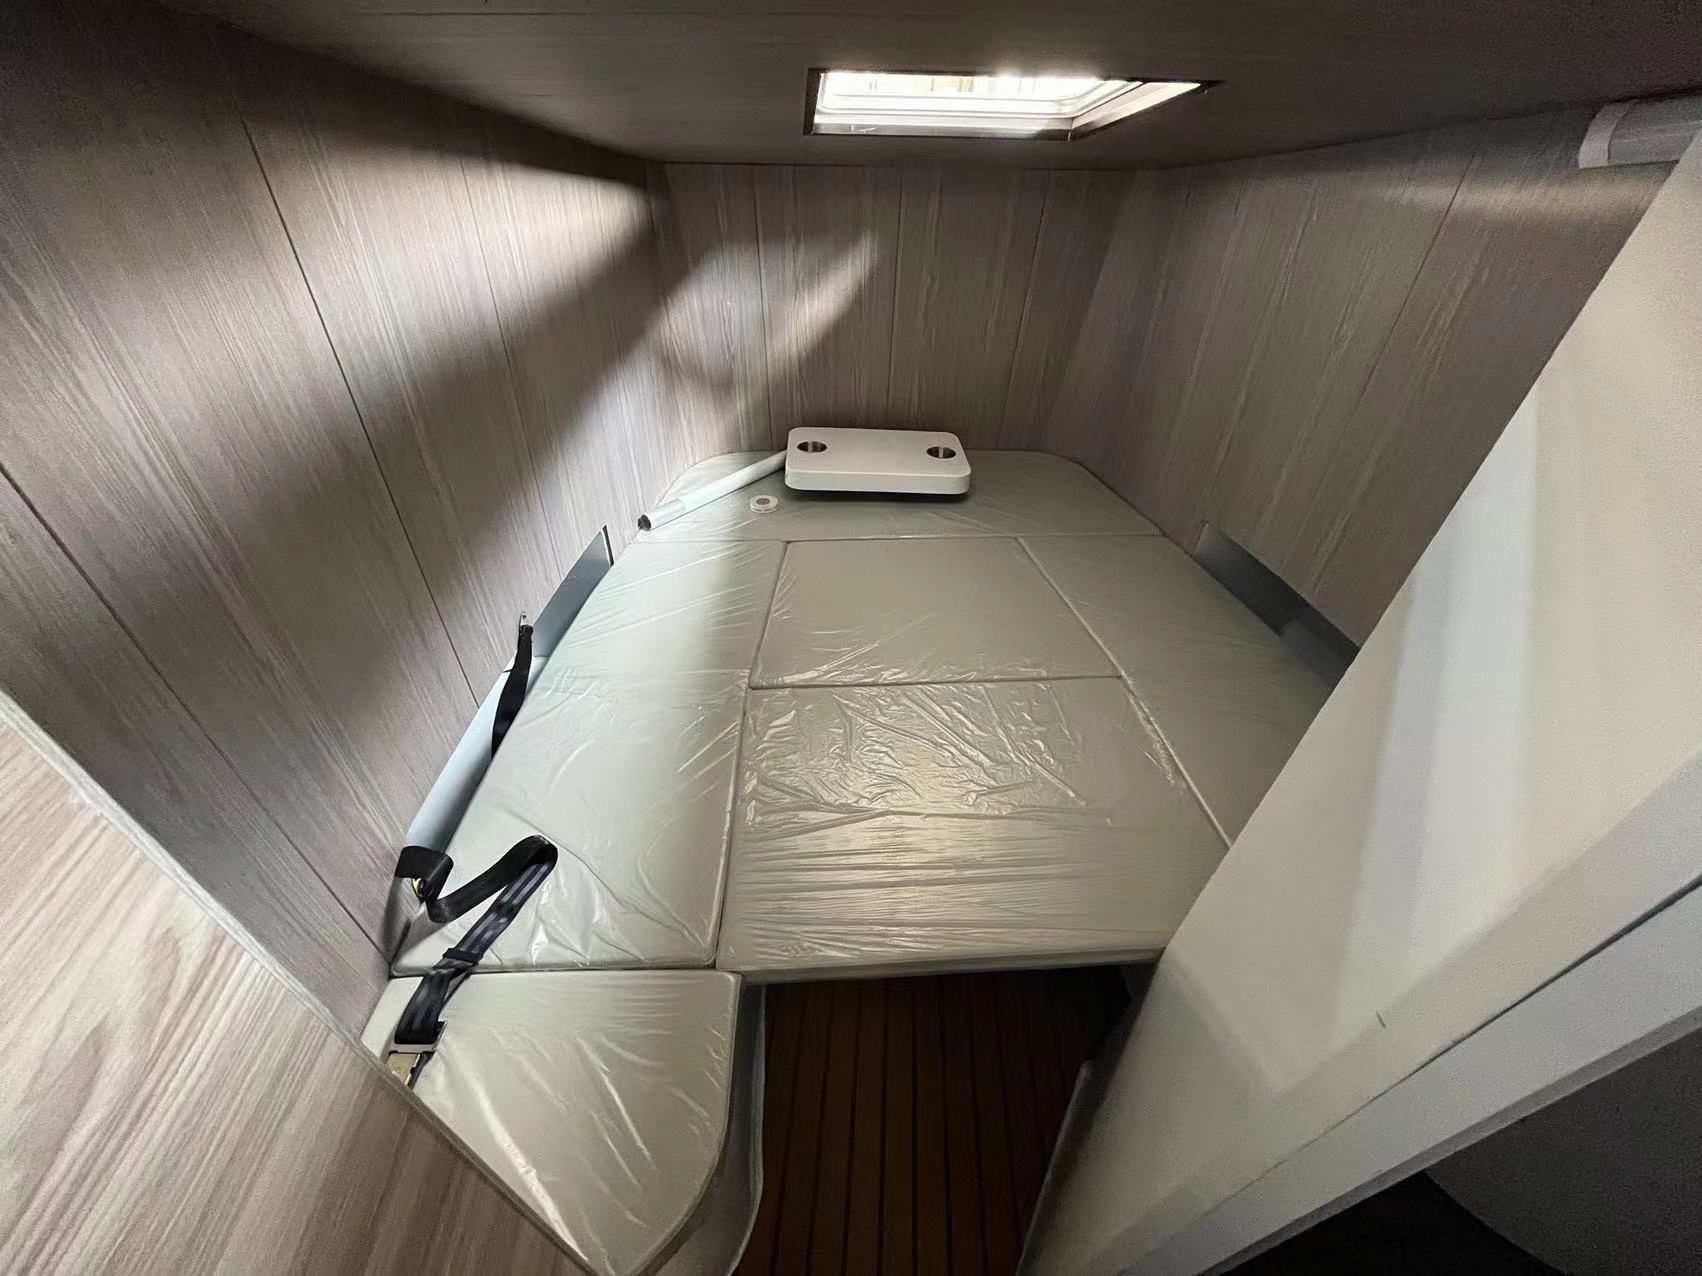 High Quality Non-skid Paint Ocean Aluminum Boat